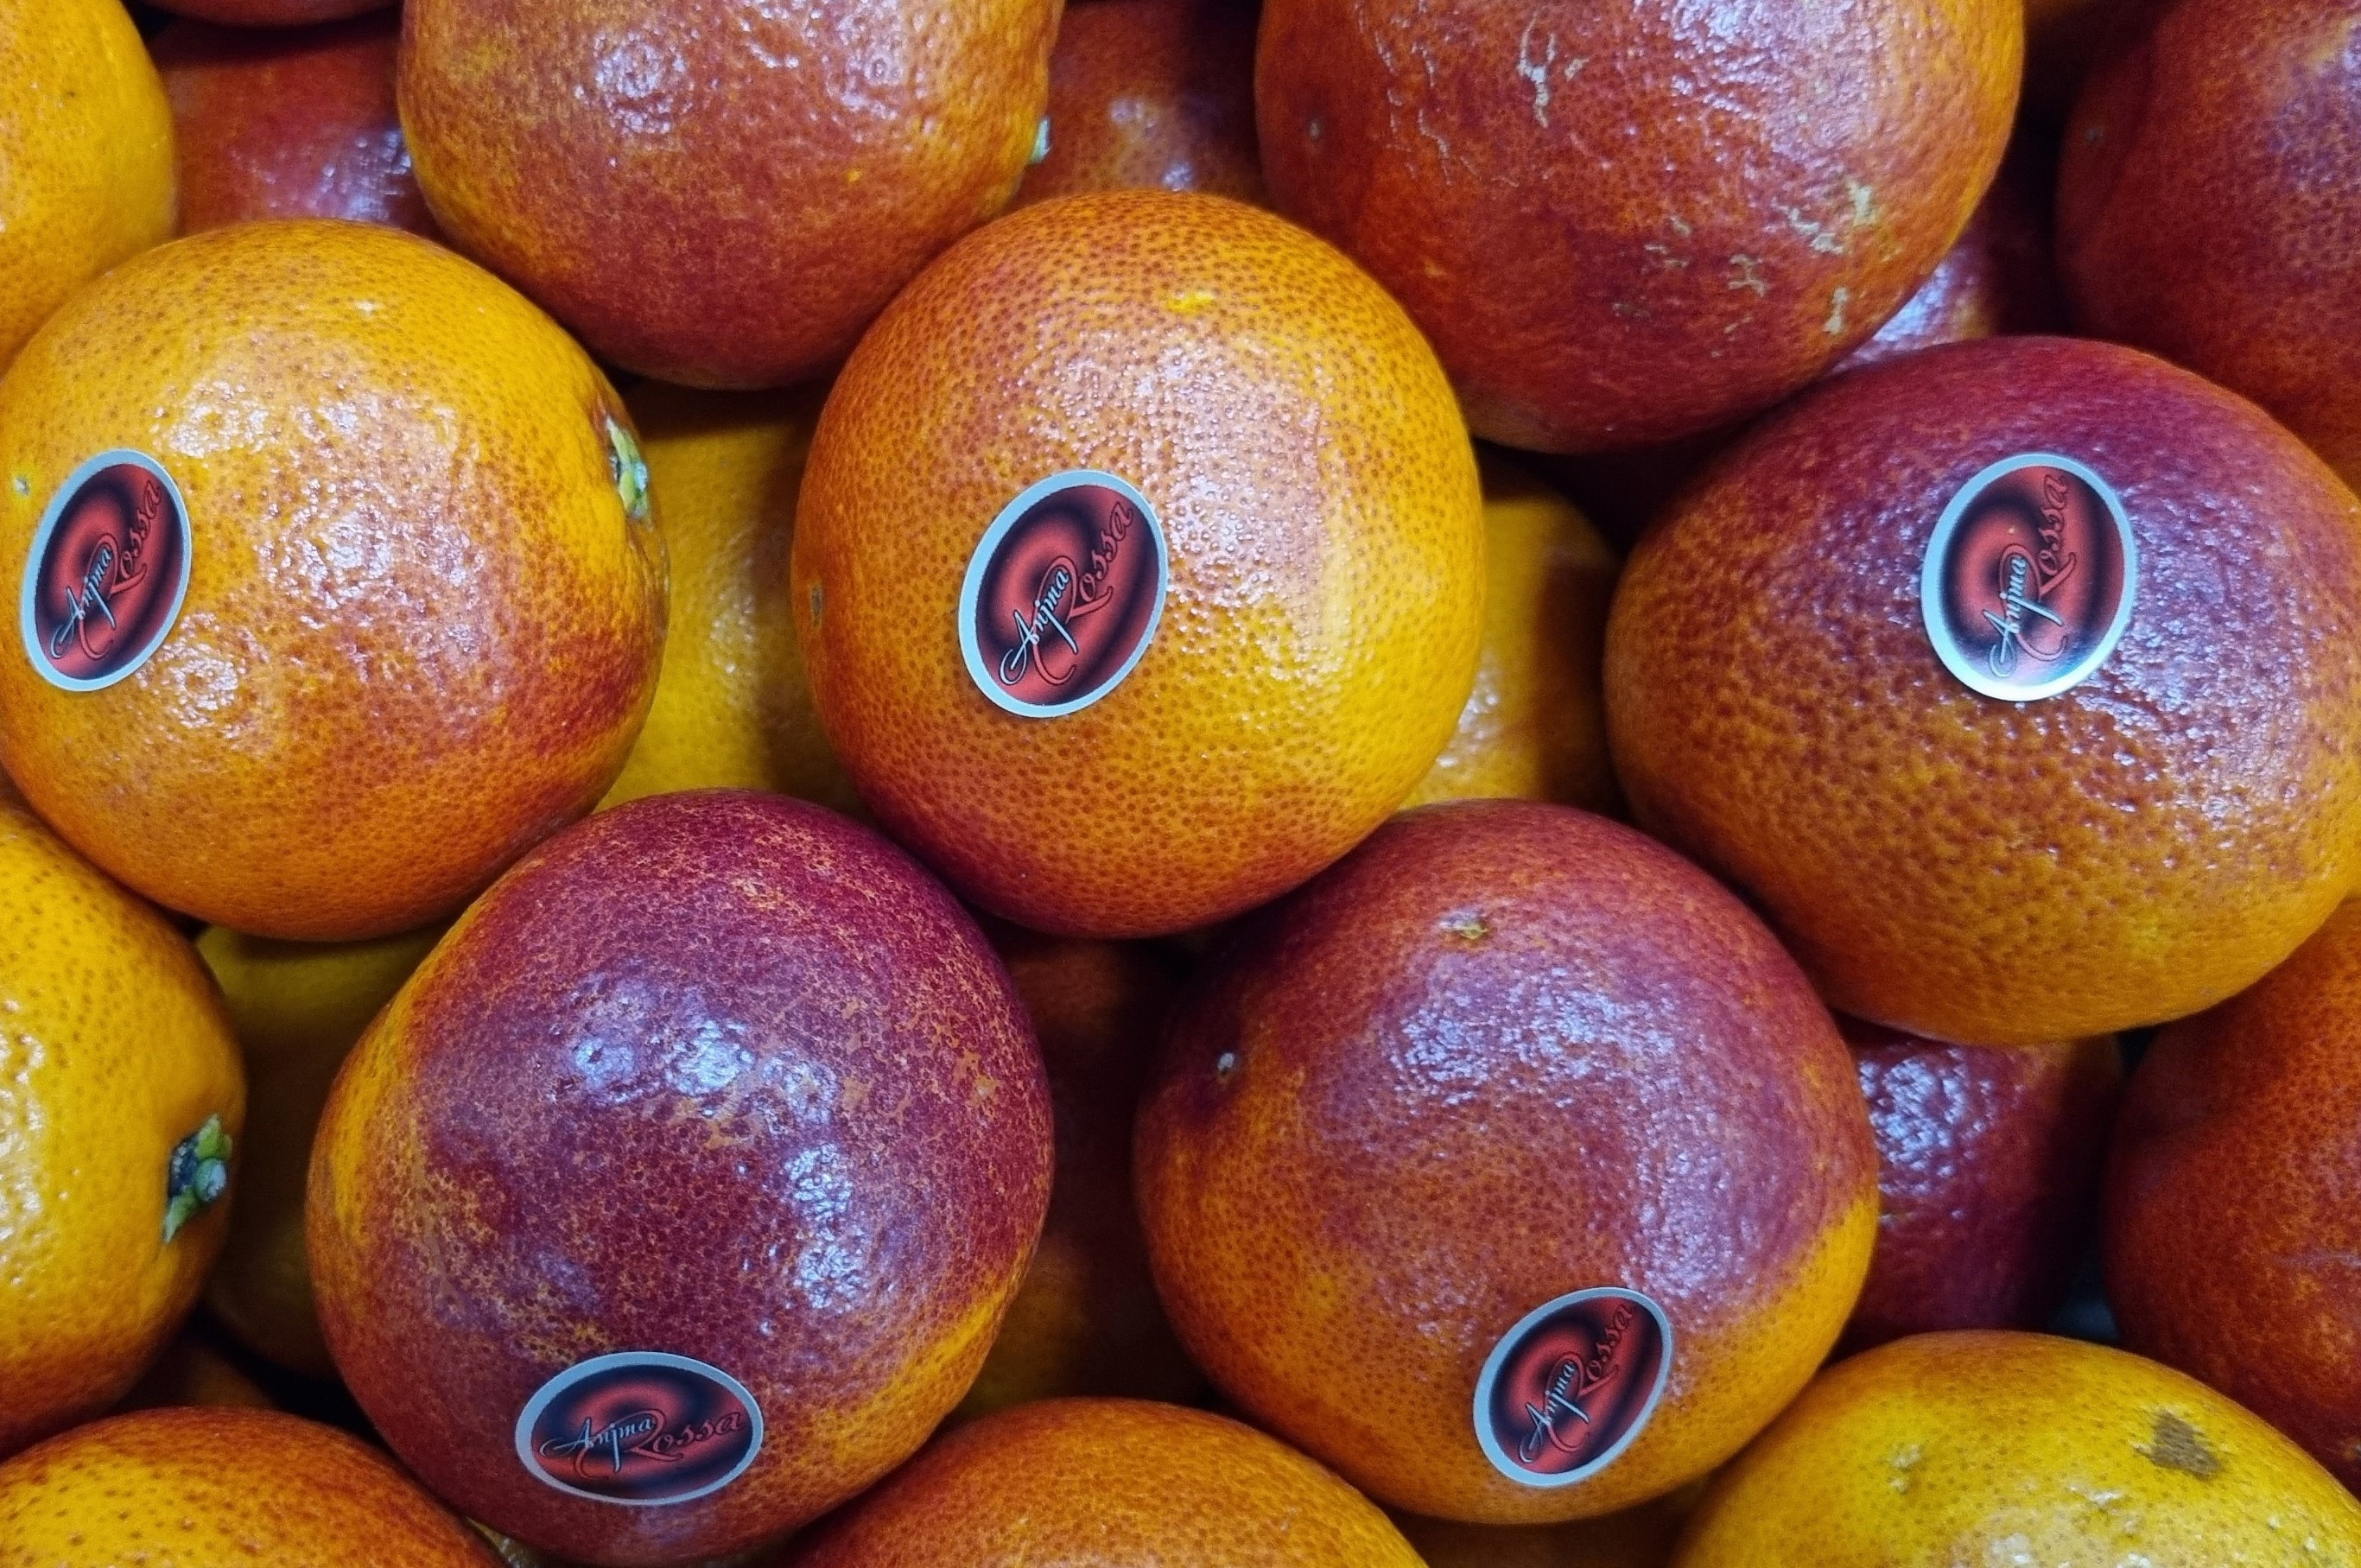 Bloed sinaasappelen per kilo Nu het seizoen